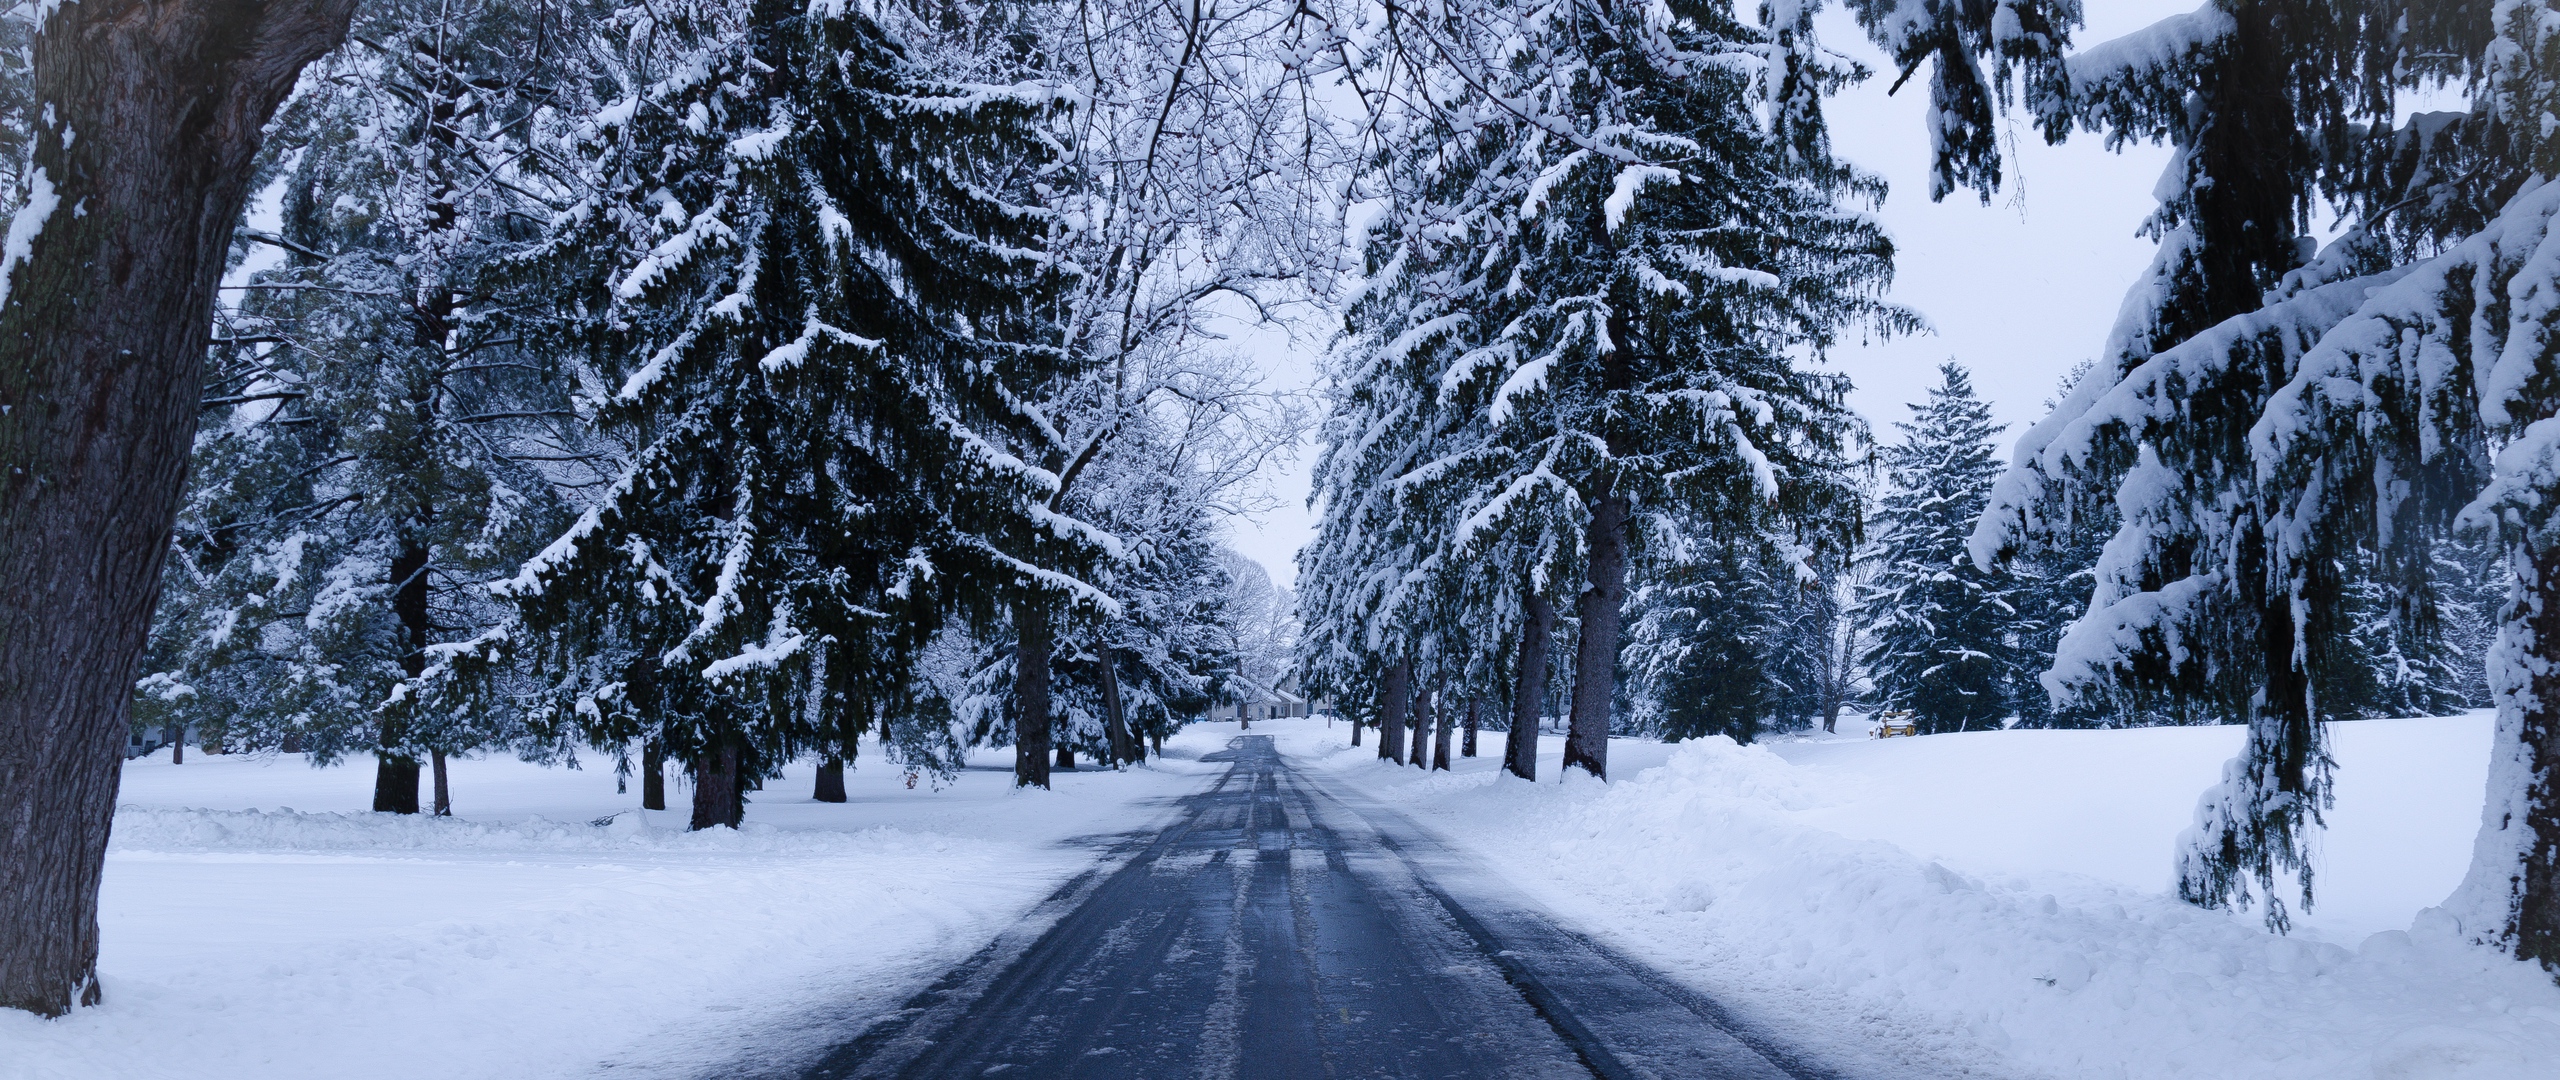 Wallpaper Winter, Road, Snow, Trees, Winter Landscape - Winter 1080p - HD Wallpaper 